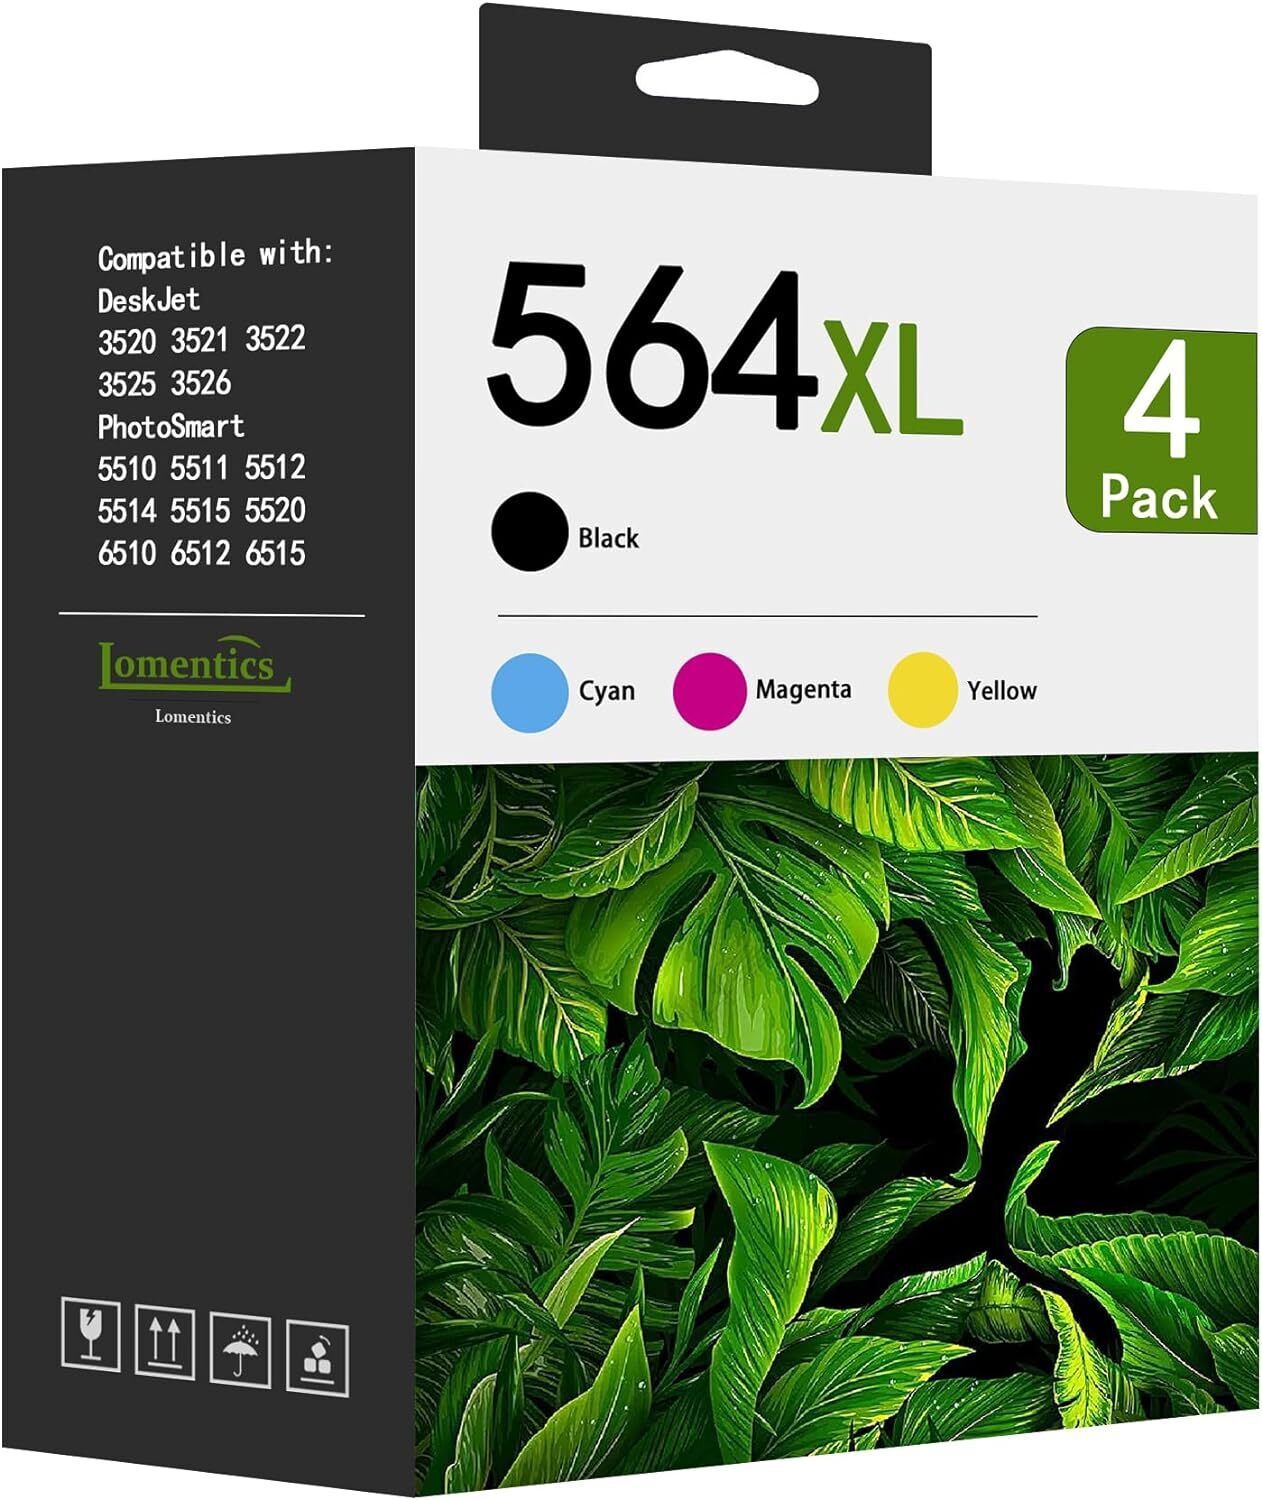 564XL Ink Cartridges Replacement for HP DeskJet 3520 3522 Photosmart 6510 7520